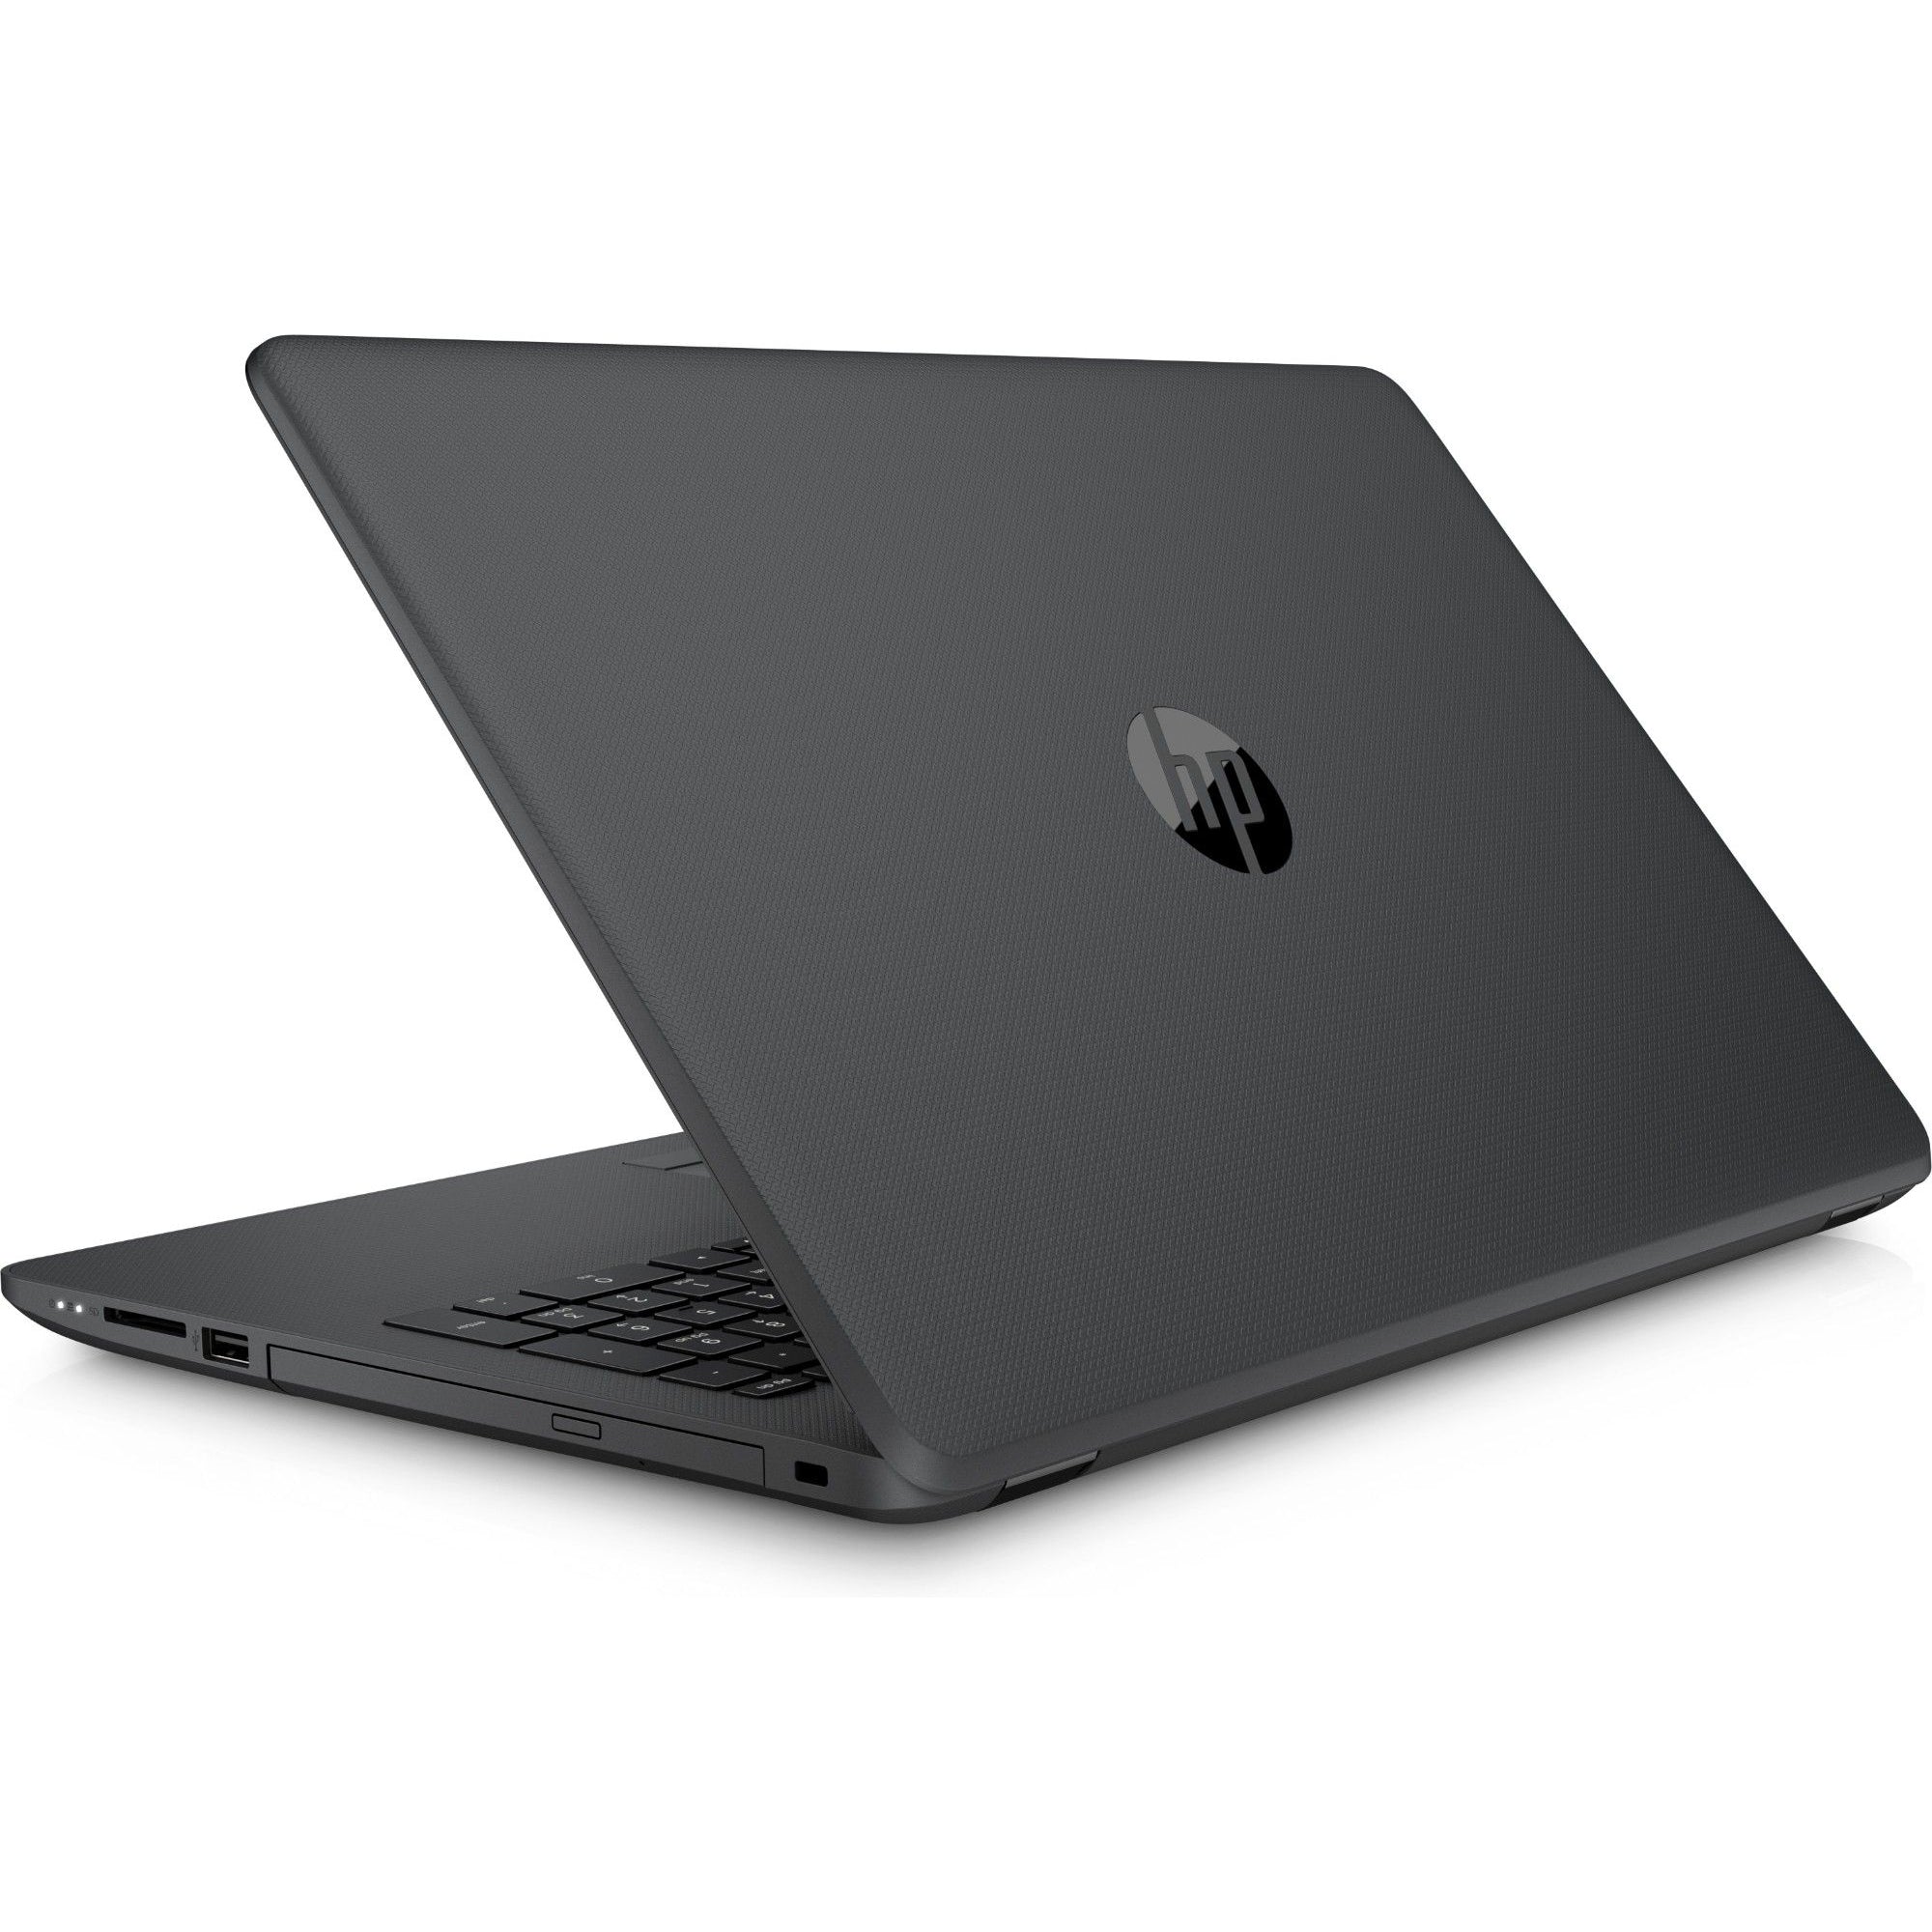 HP 250 G6 Notebook Intel Core i3-7020U 4GB RAM 500GB HDD 15.6" - Black